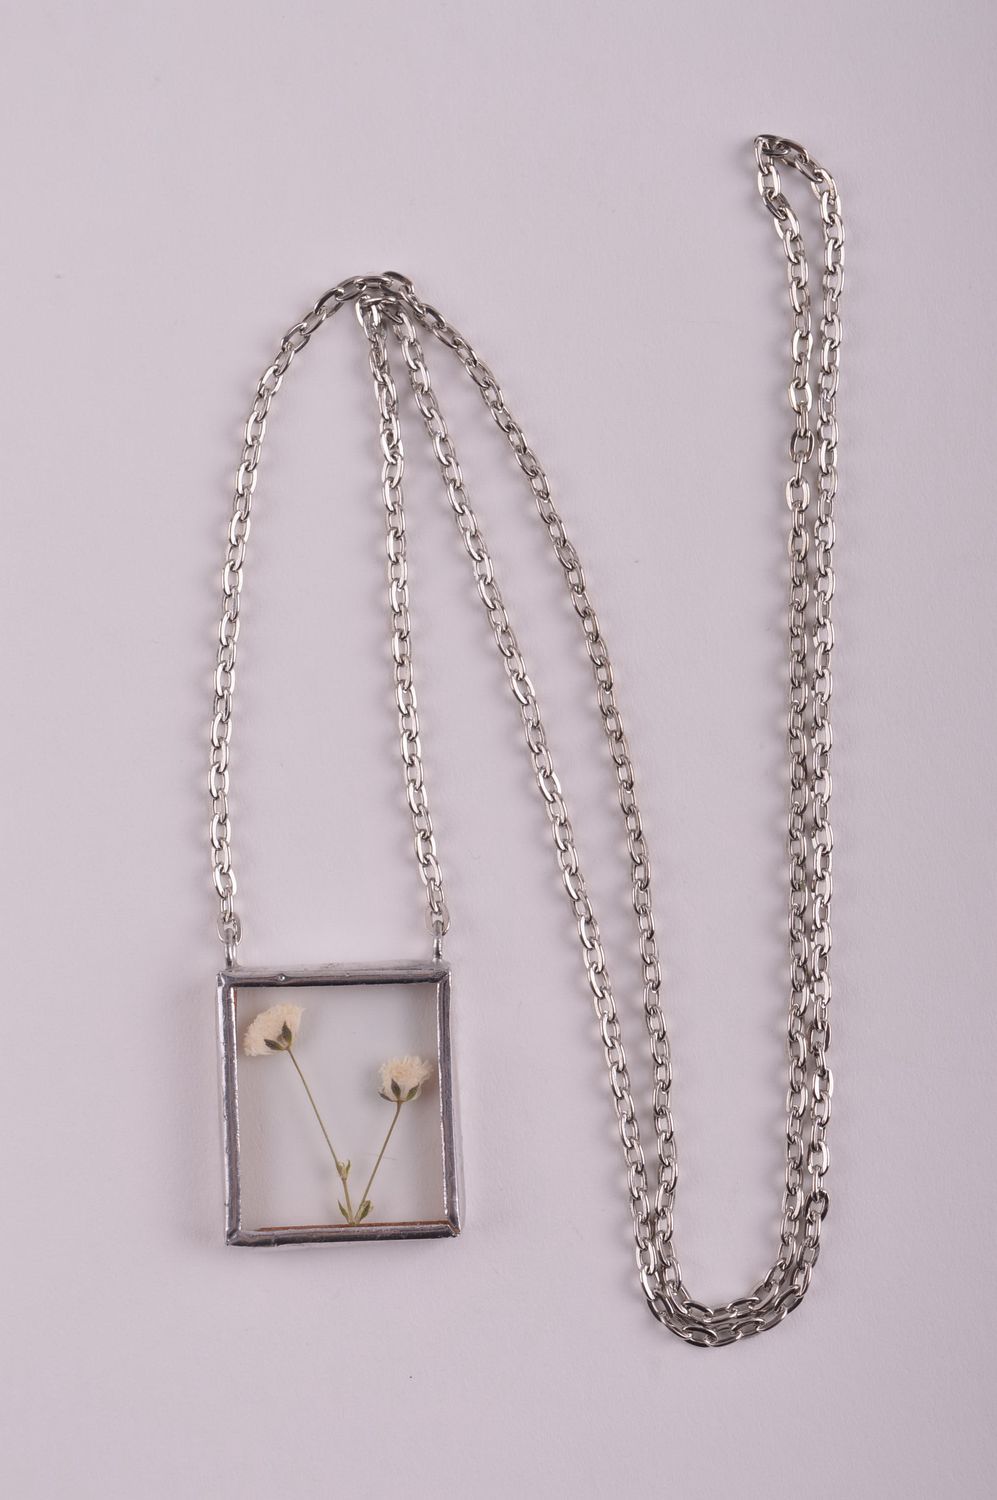 Stylish handmade neck pendant glass pendant artisan jewelry designs gift ideas photo 4